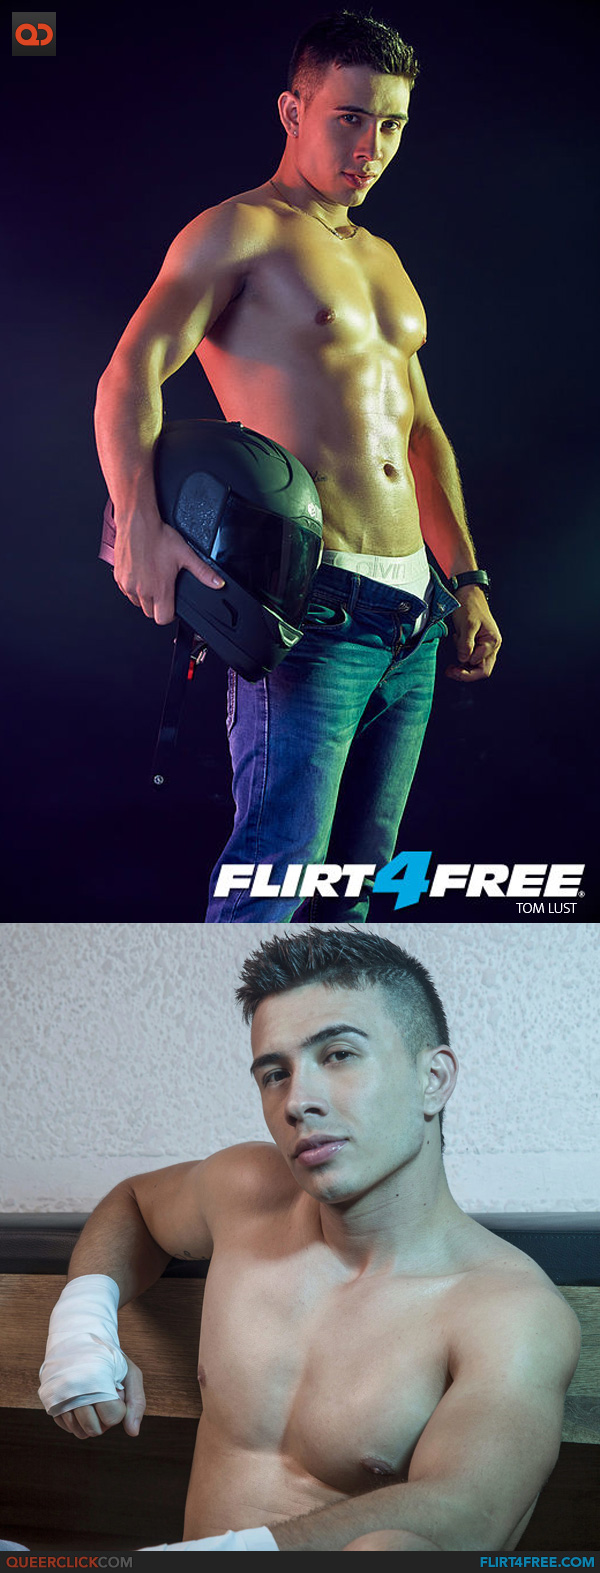 Flirt4Free: Tom Lust